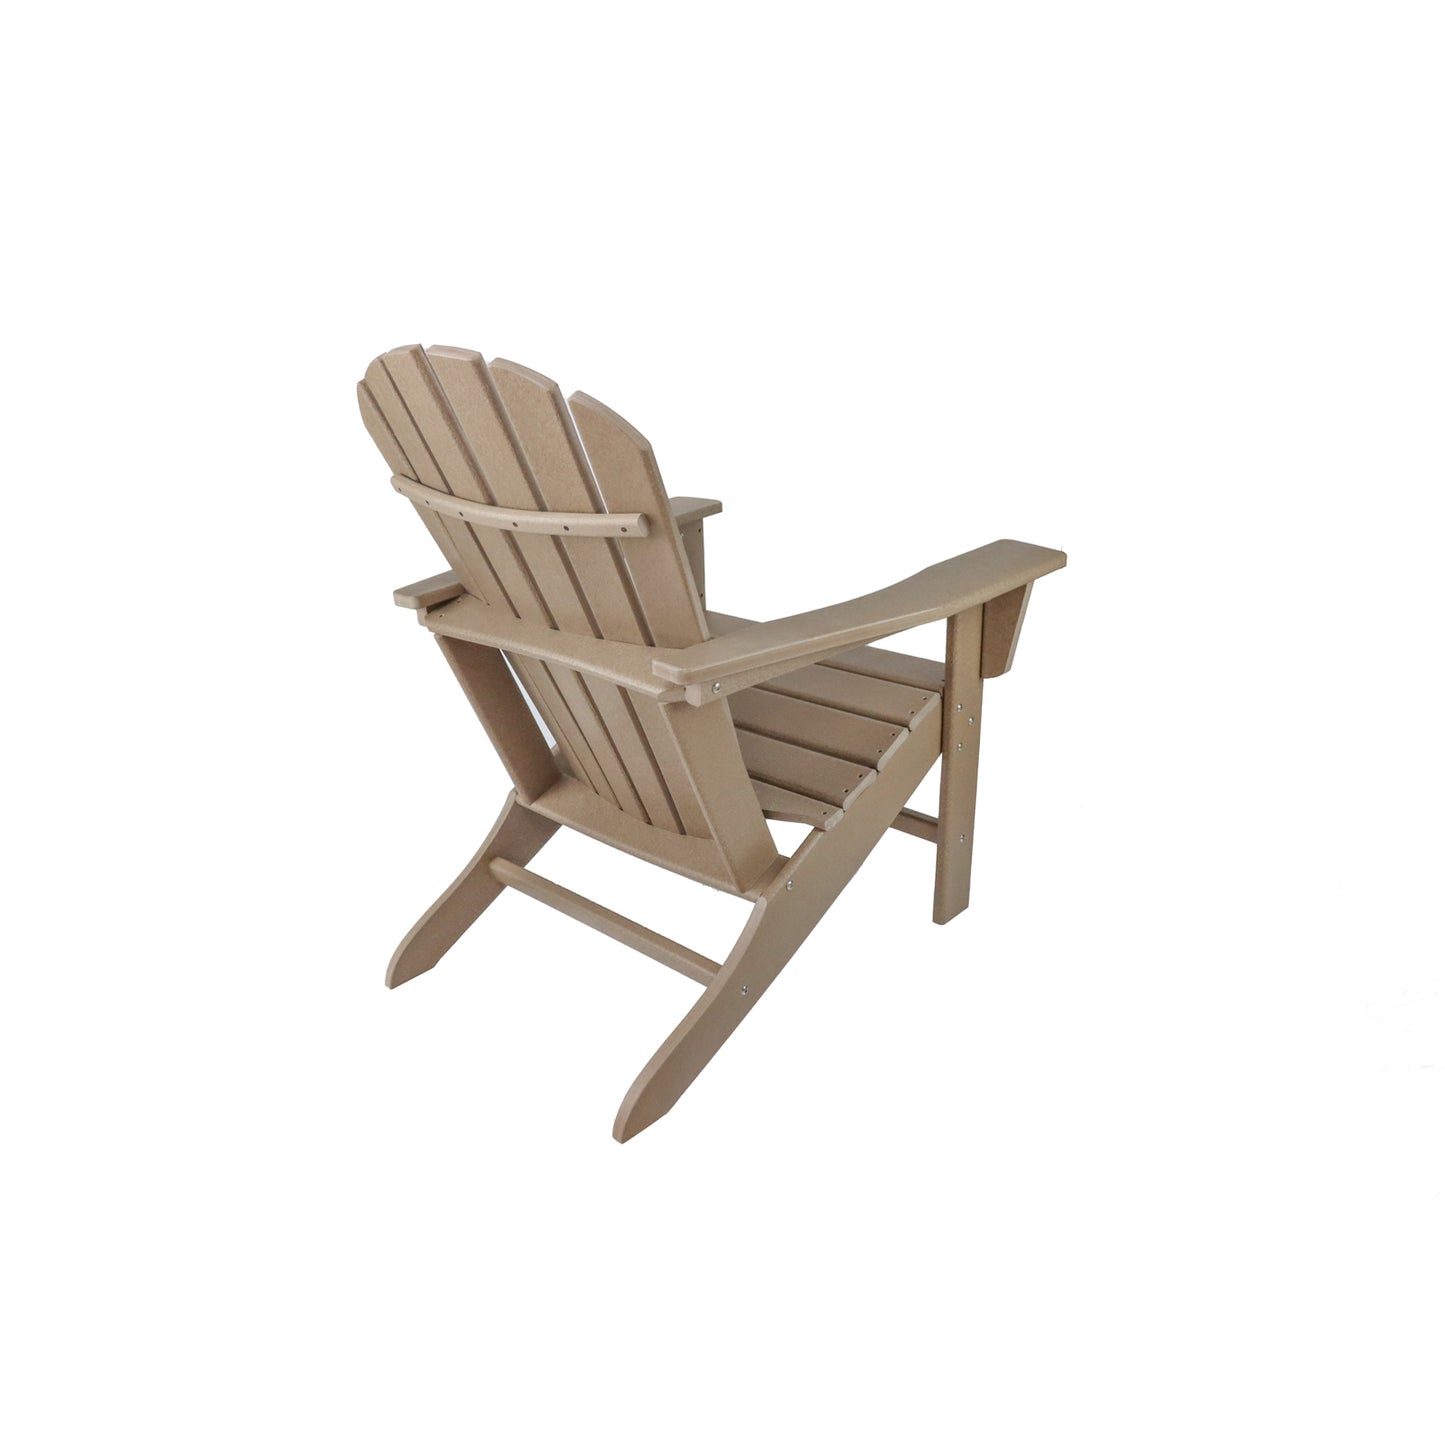 UM HDPE Resin Wood Adirondack Chair - Grey